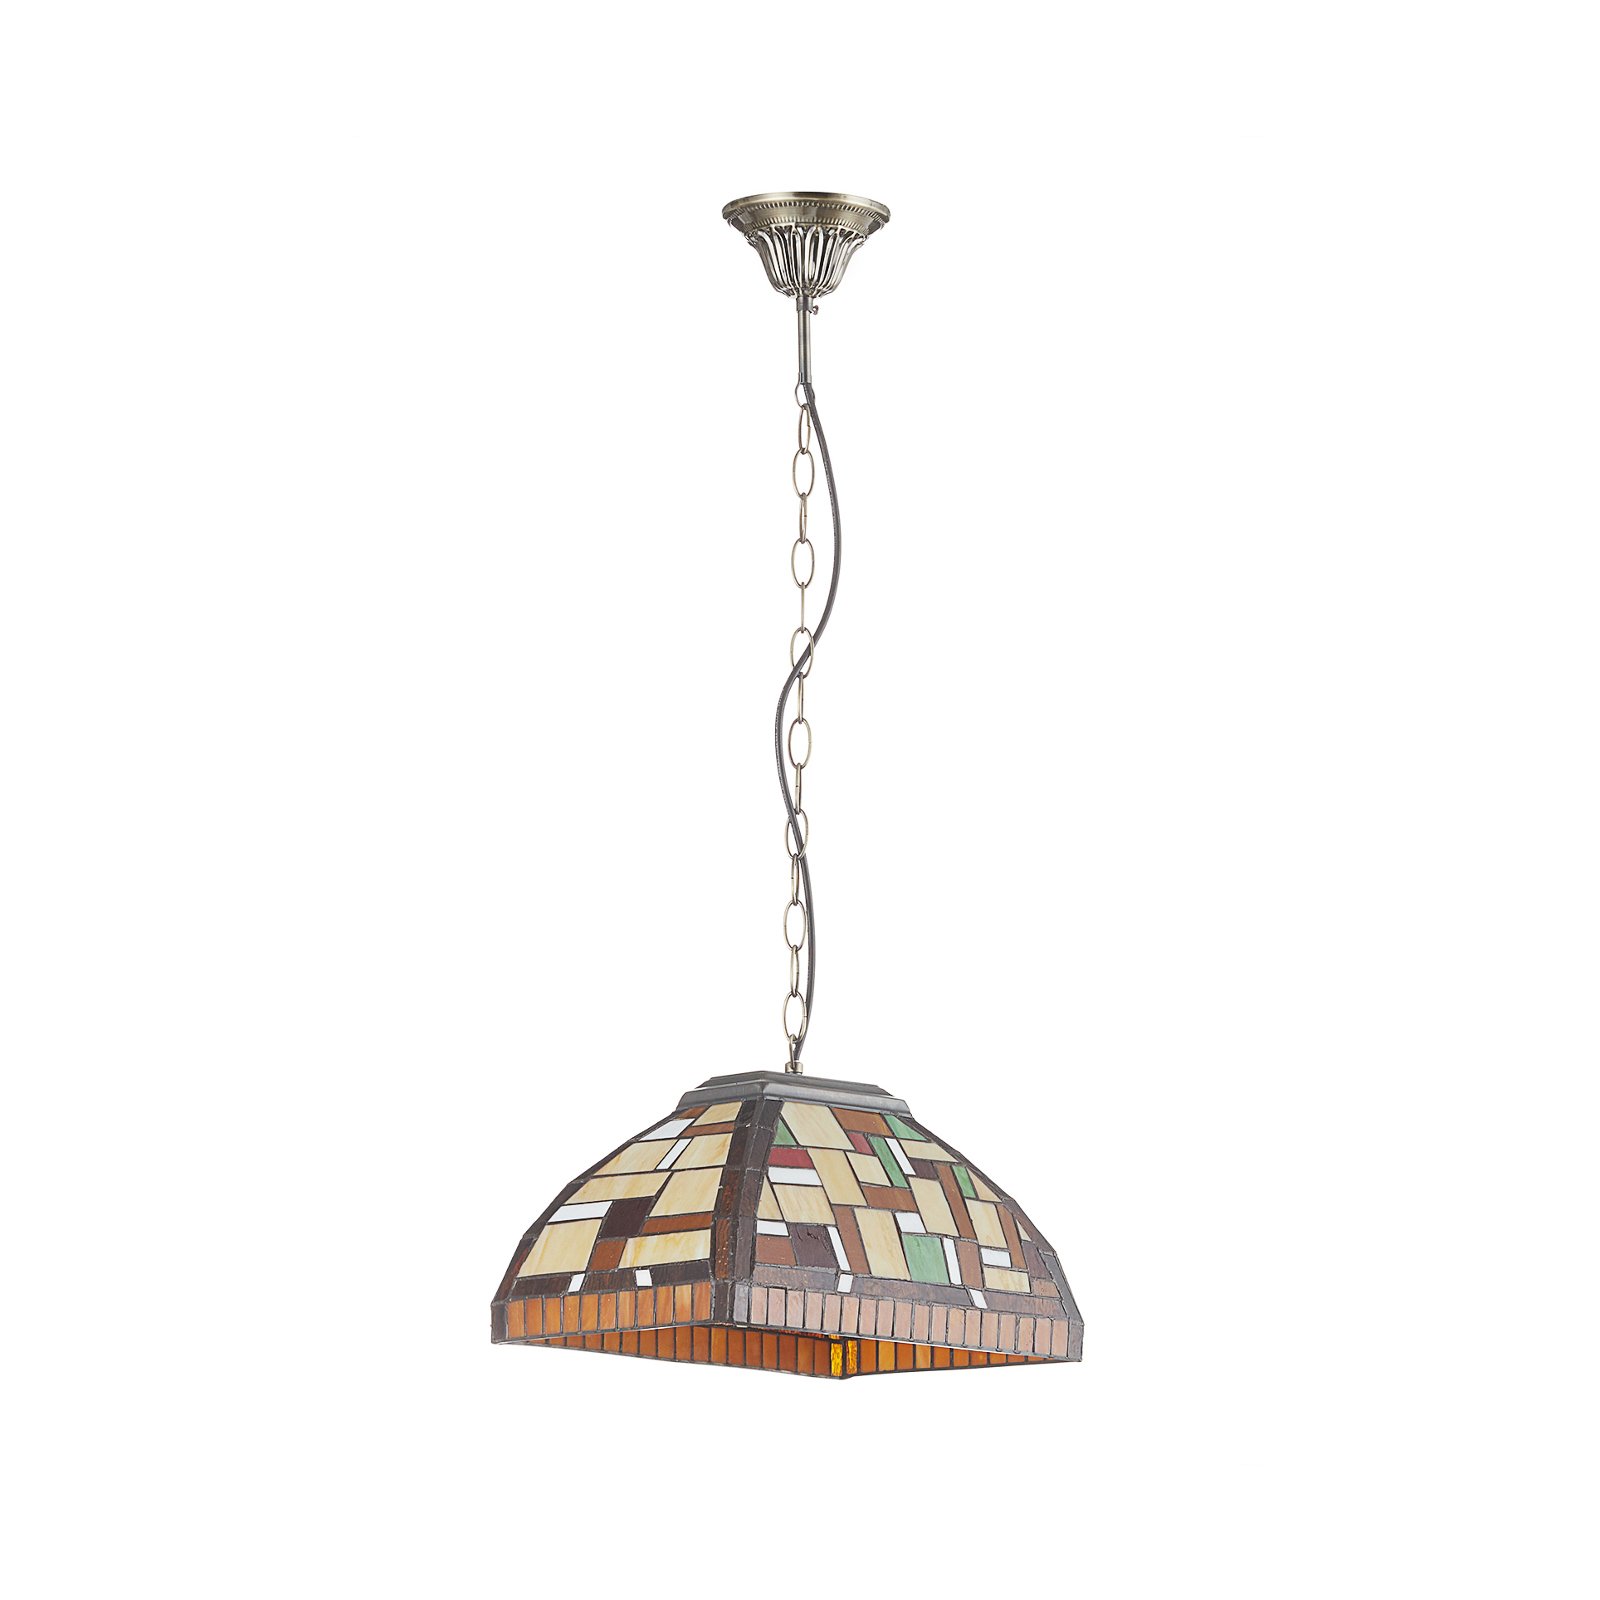 Mosaico hanglamp in Tiffany stijl